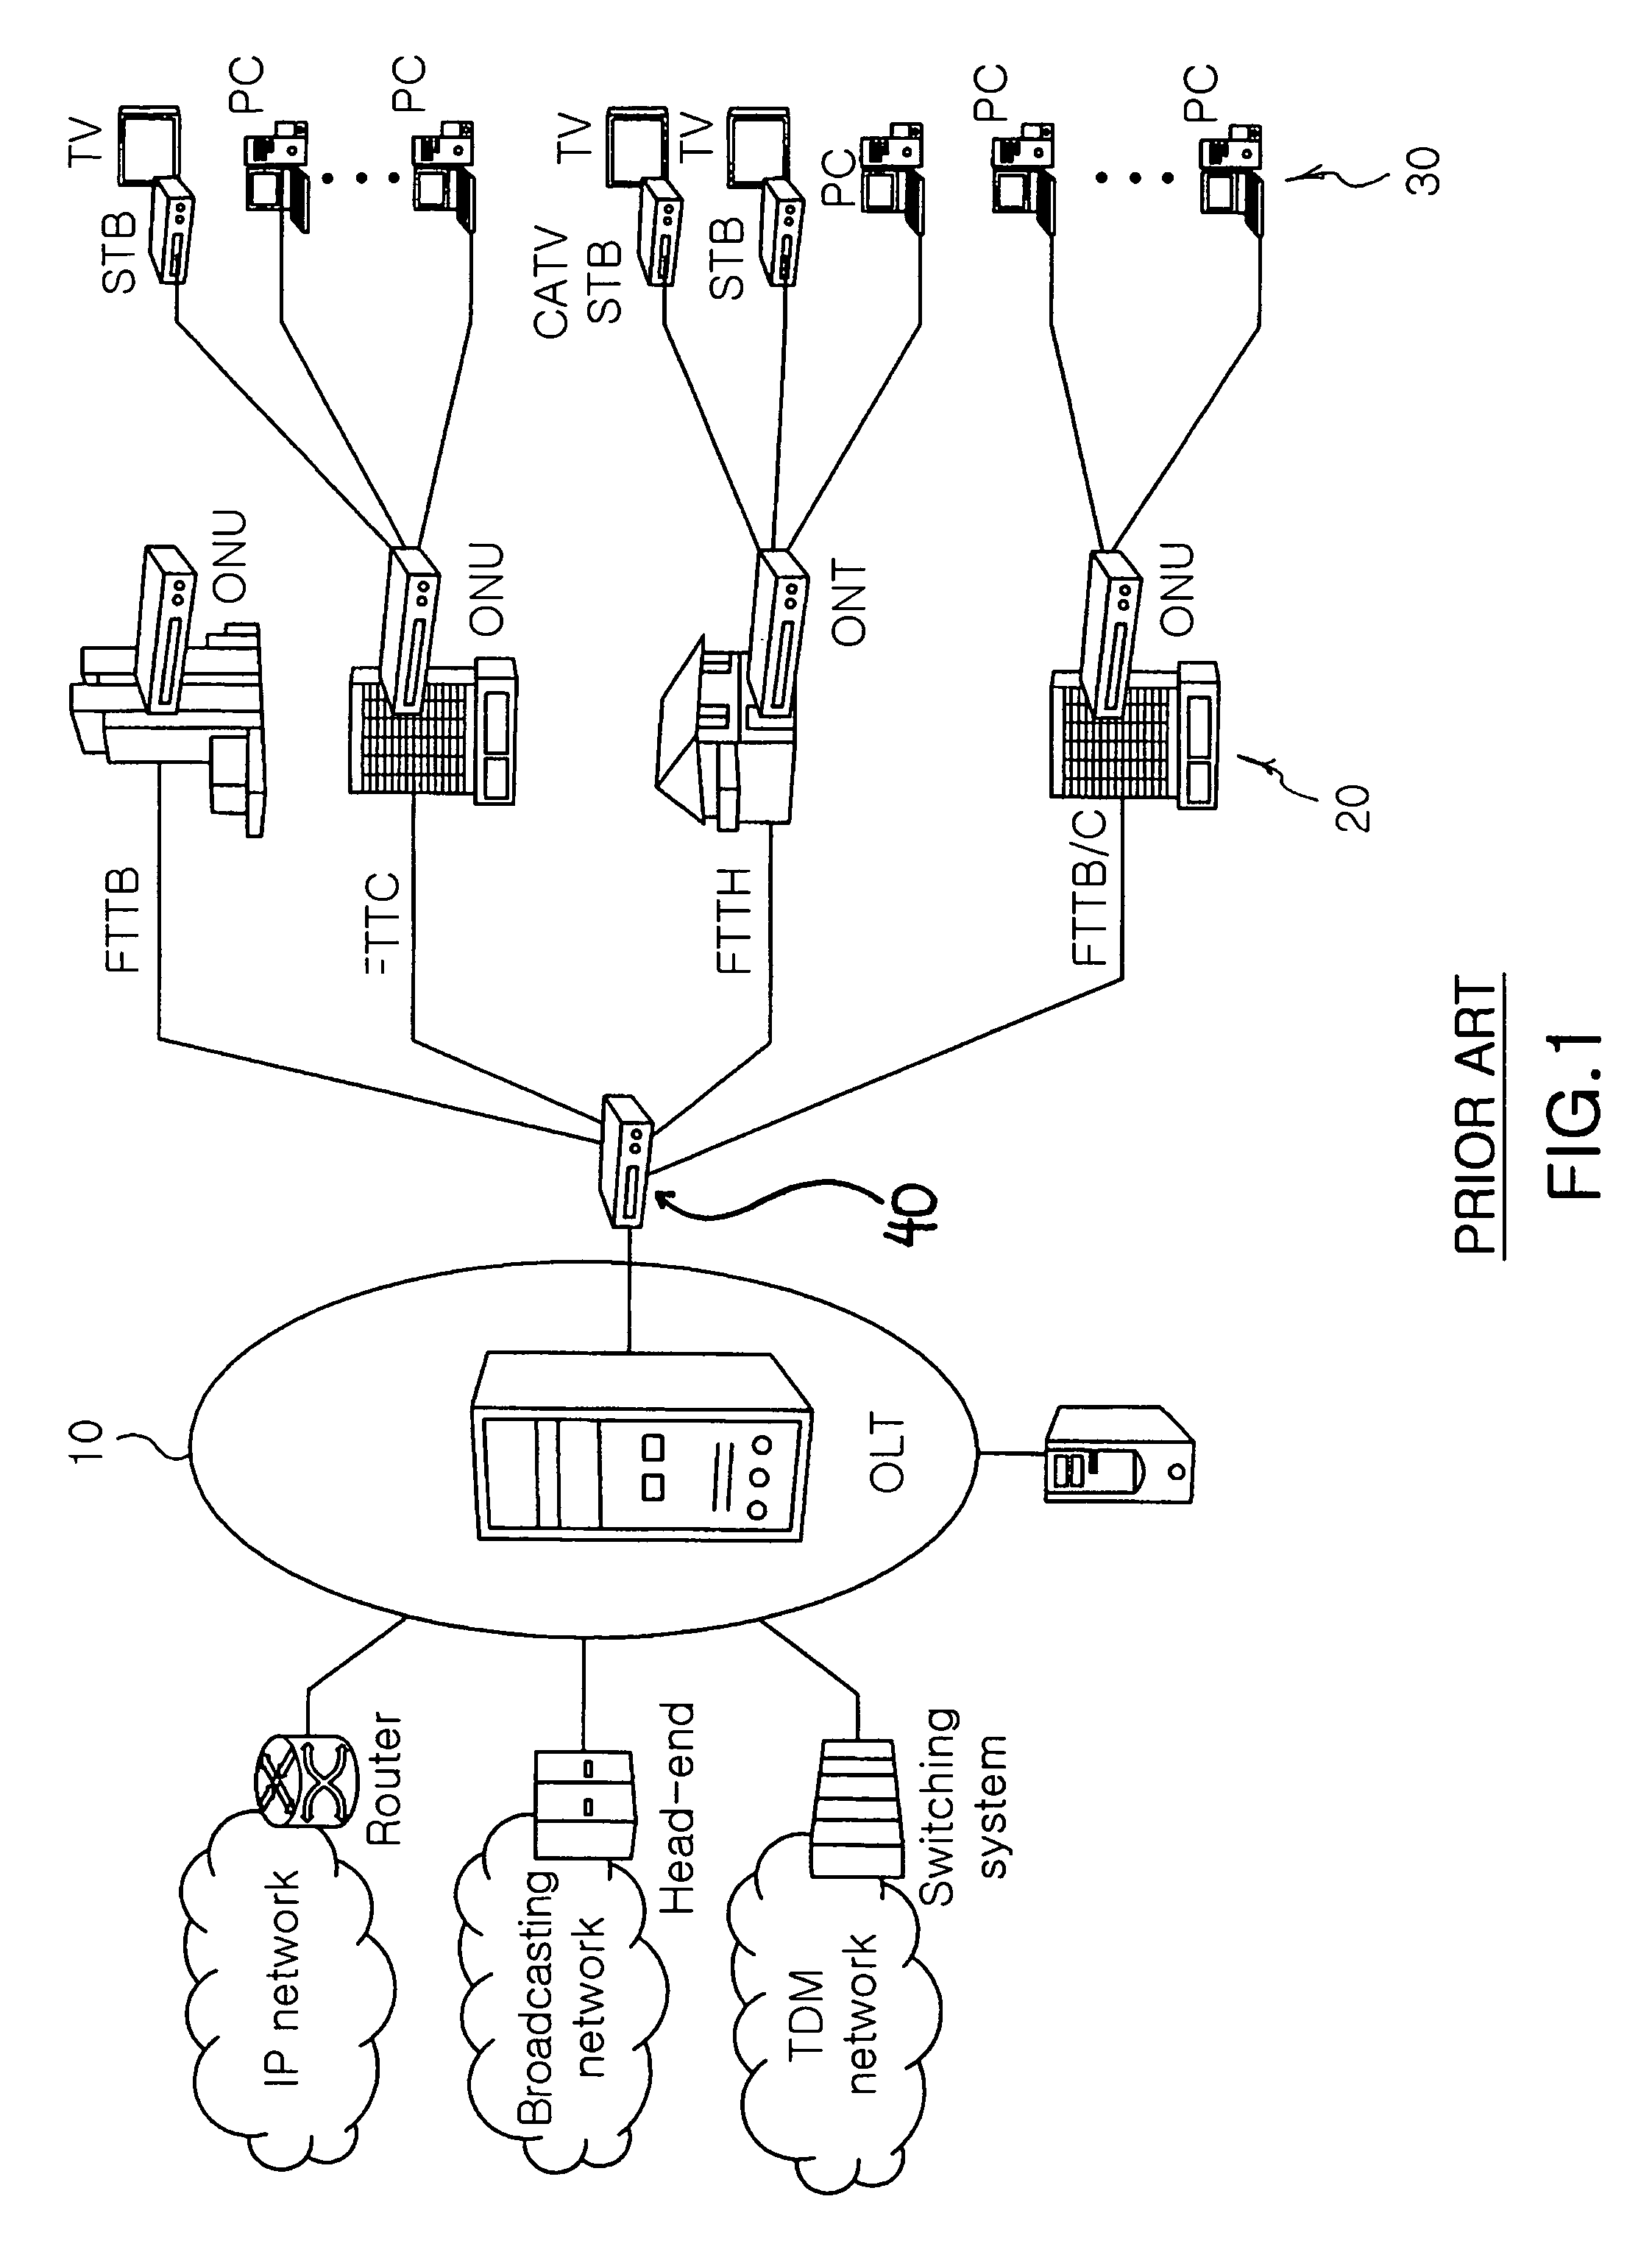 Burst data reception method and apparatus in EPON